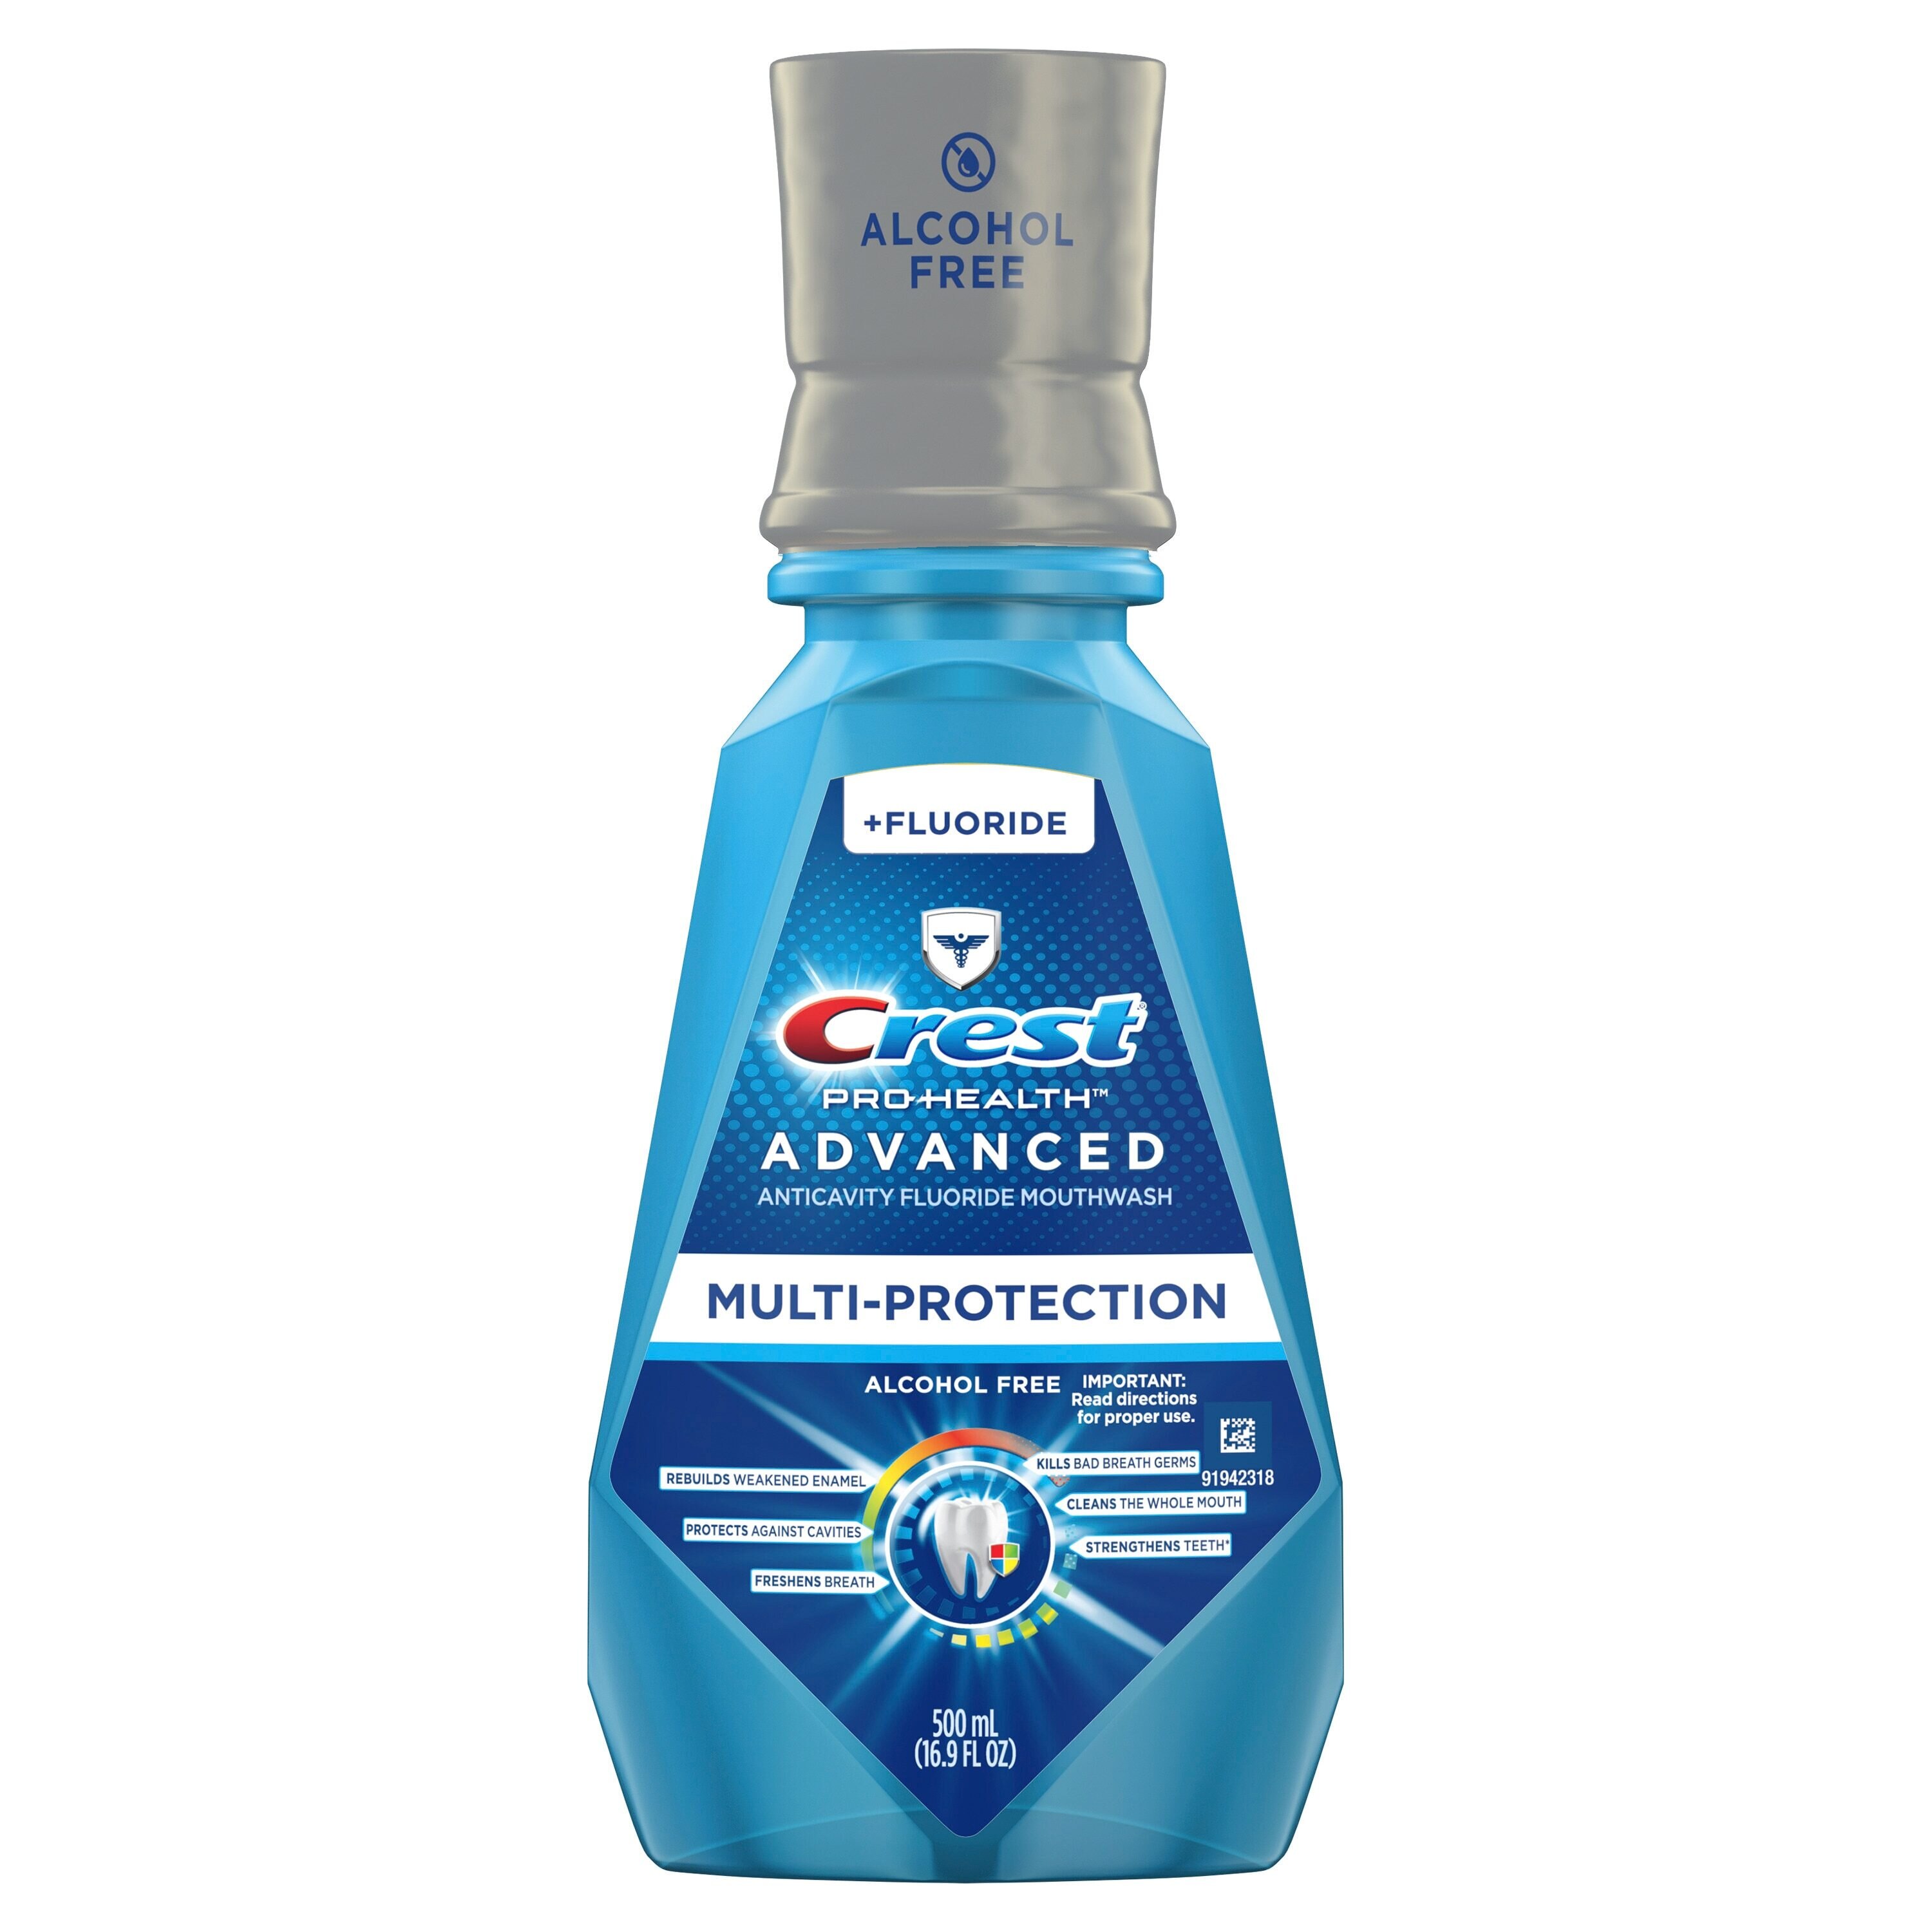 Crest Pro-Health Advanced Multi-Protection Anticavity Fluoride Mouthwash, Alcohol-Free